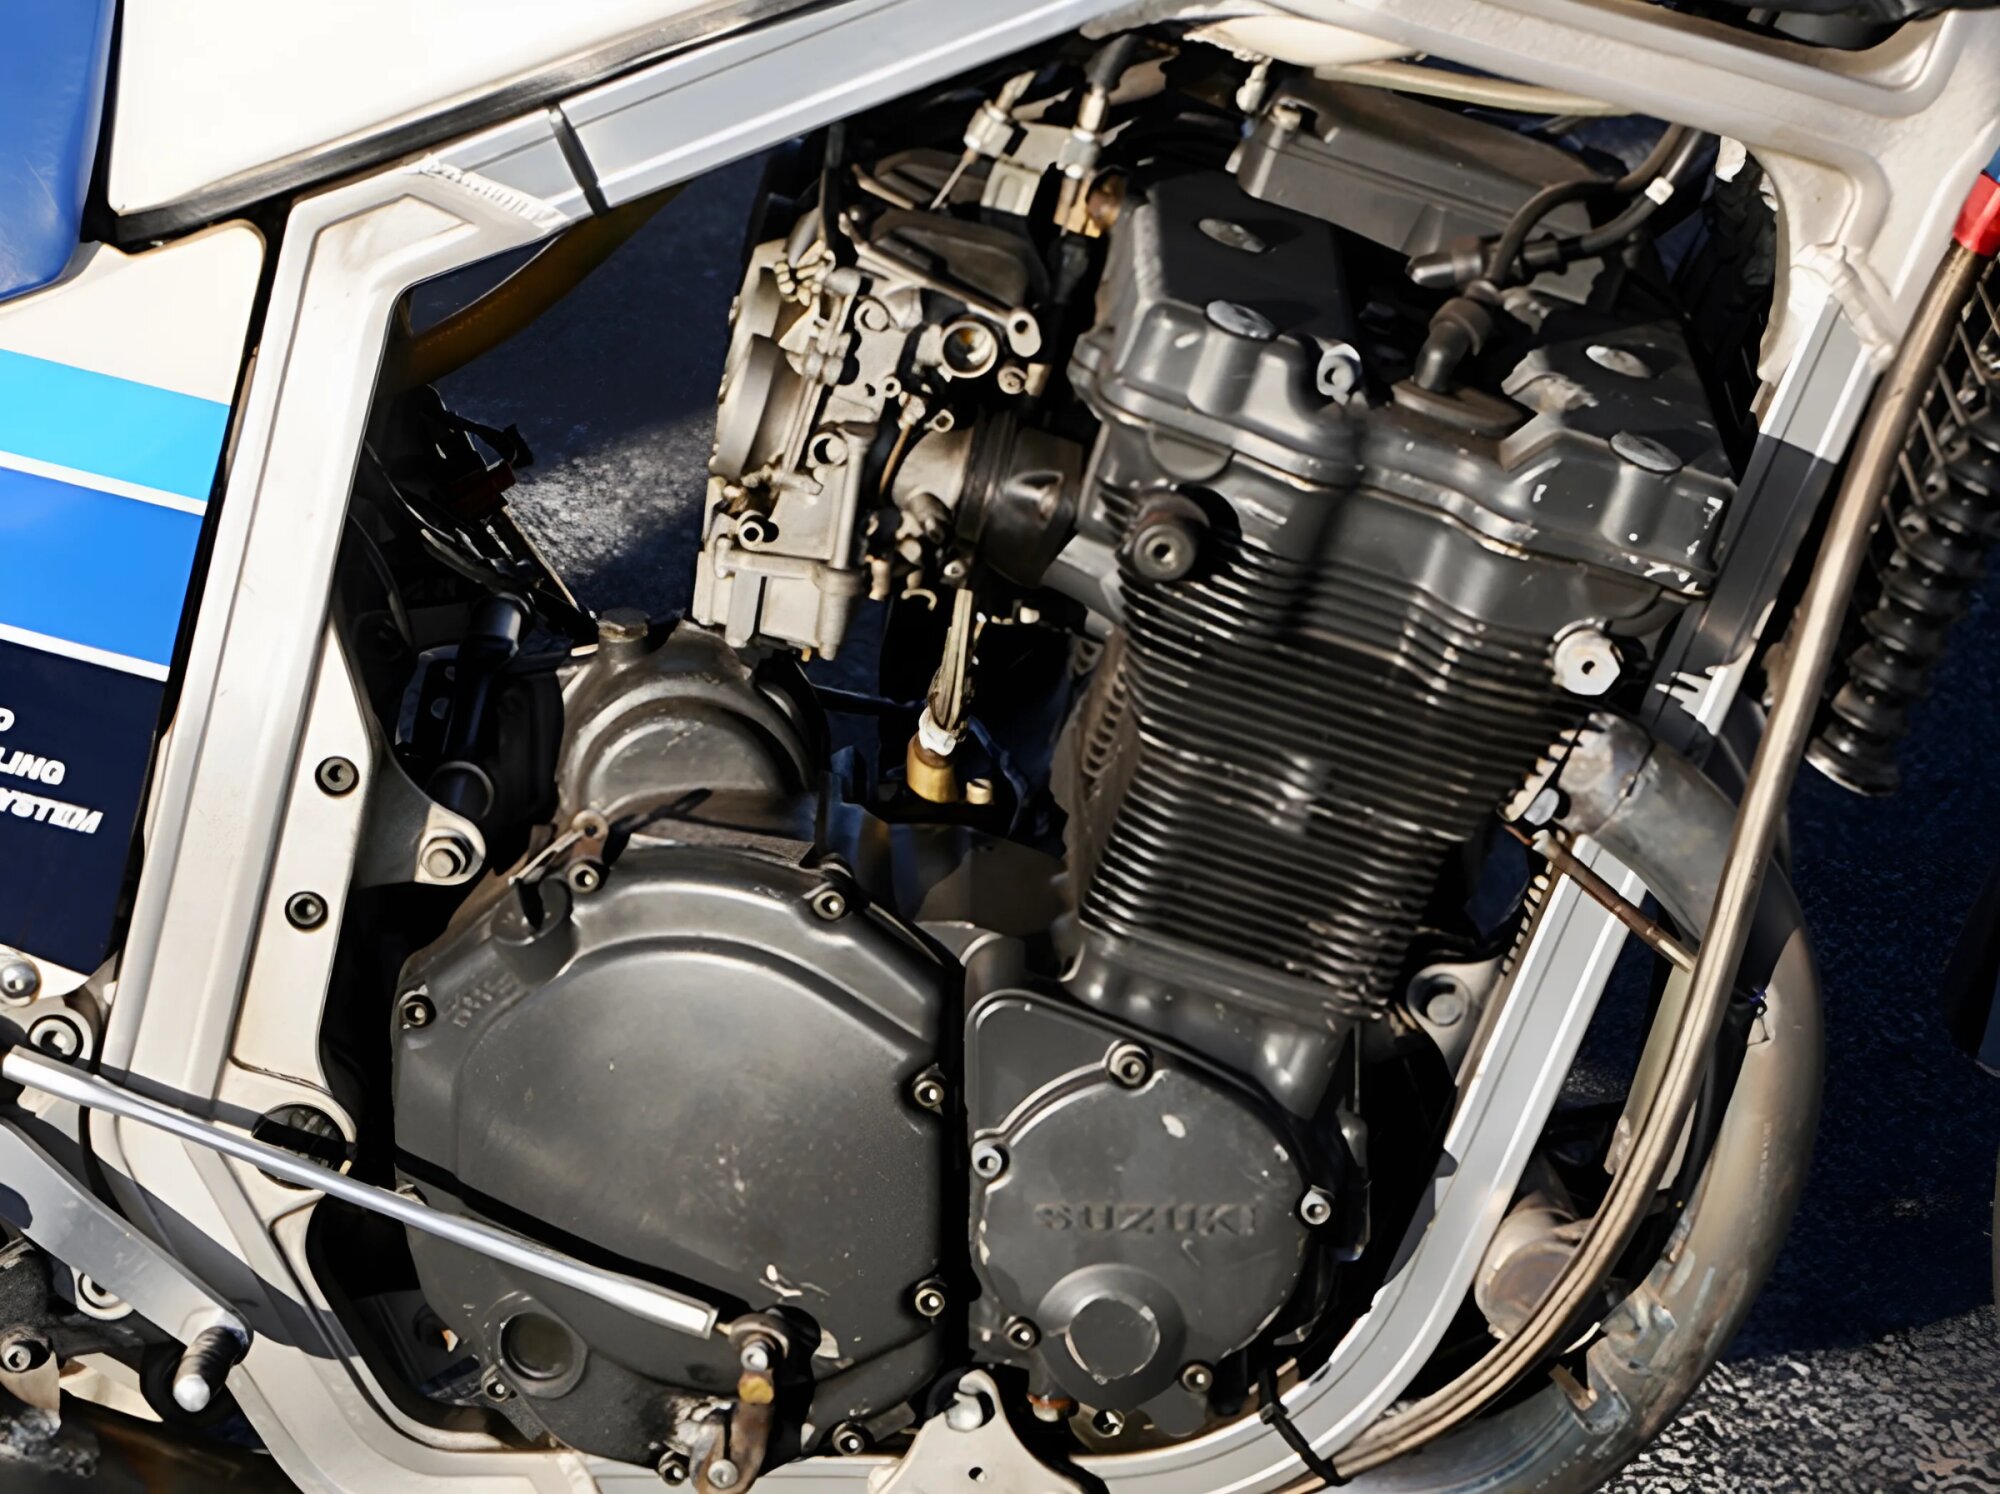 ▲R750の油冷エンジン。細かな放熱フィンが特徴〈画像引用元：Australian Motorcycle News〉